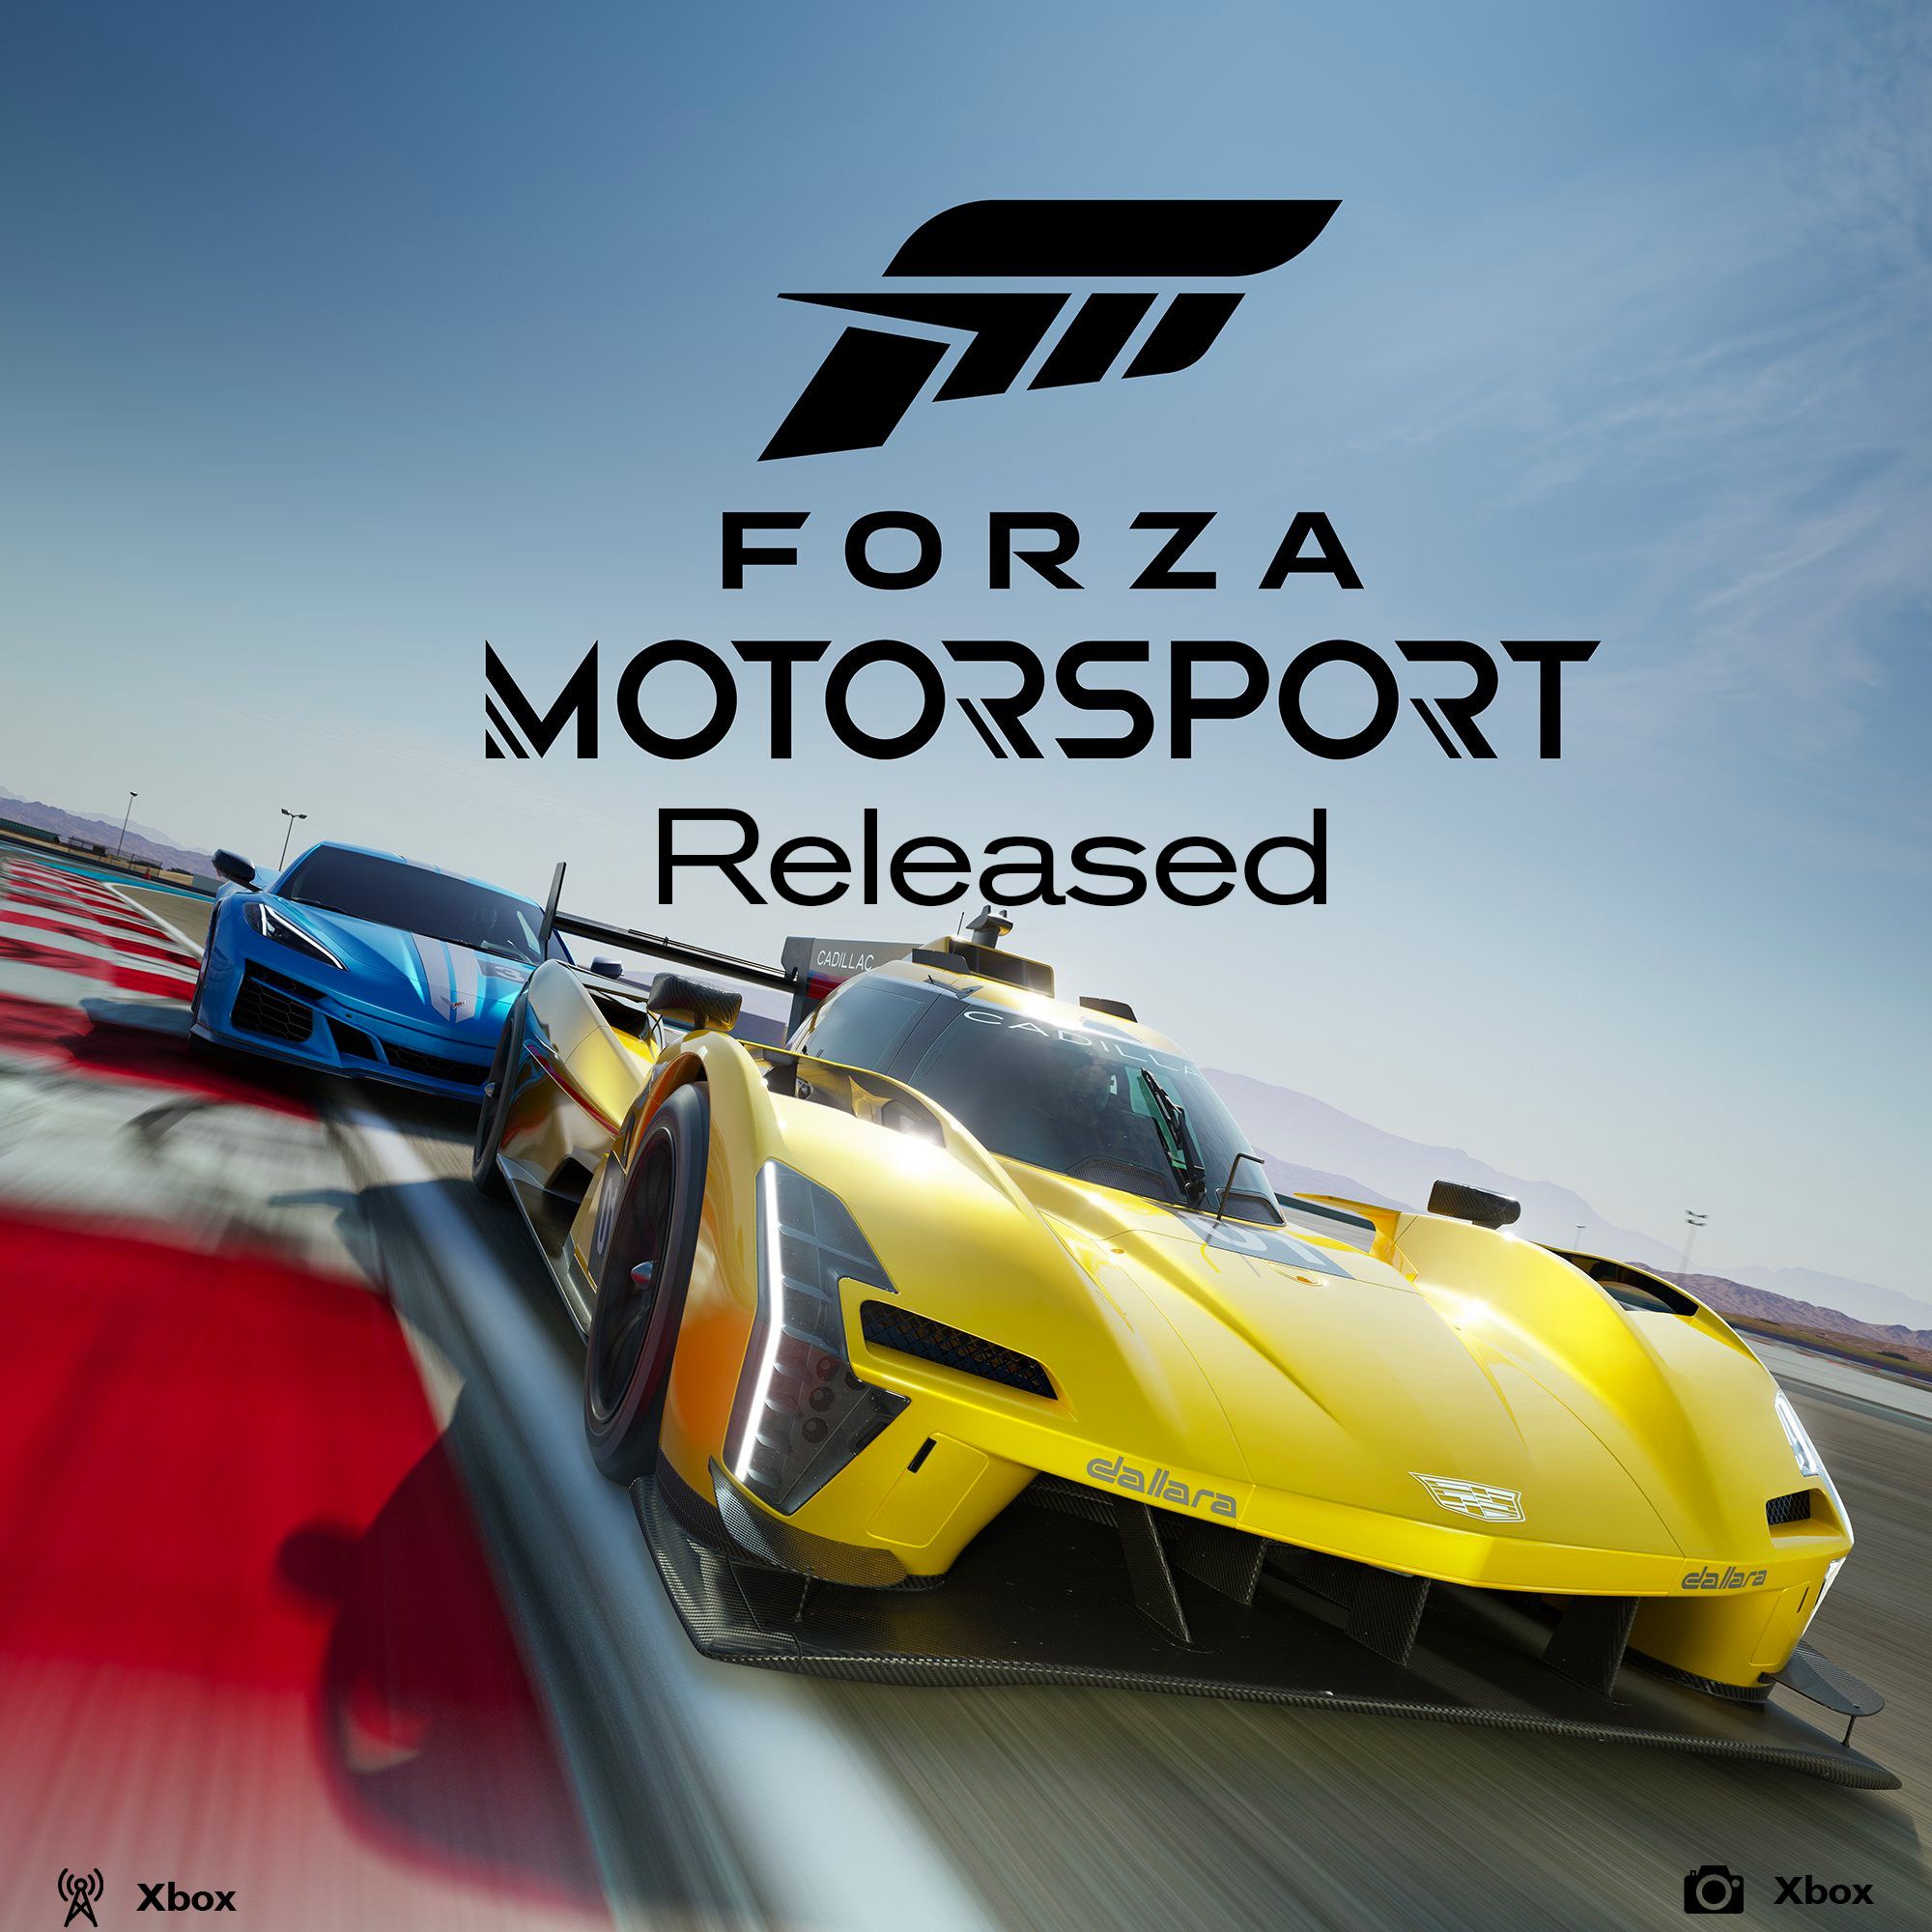 Forza Motosport released